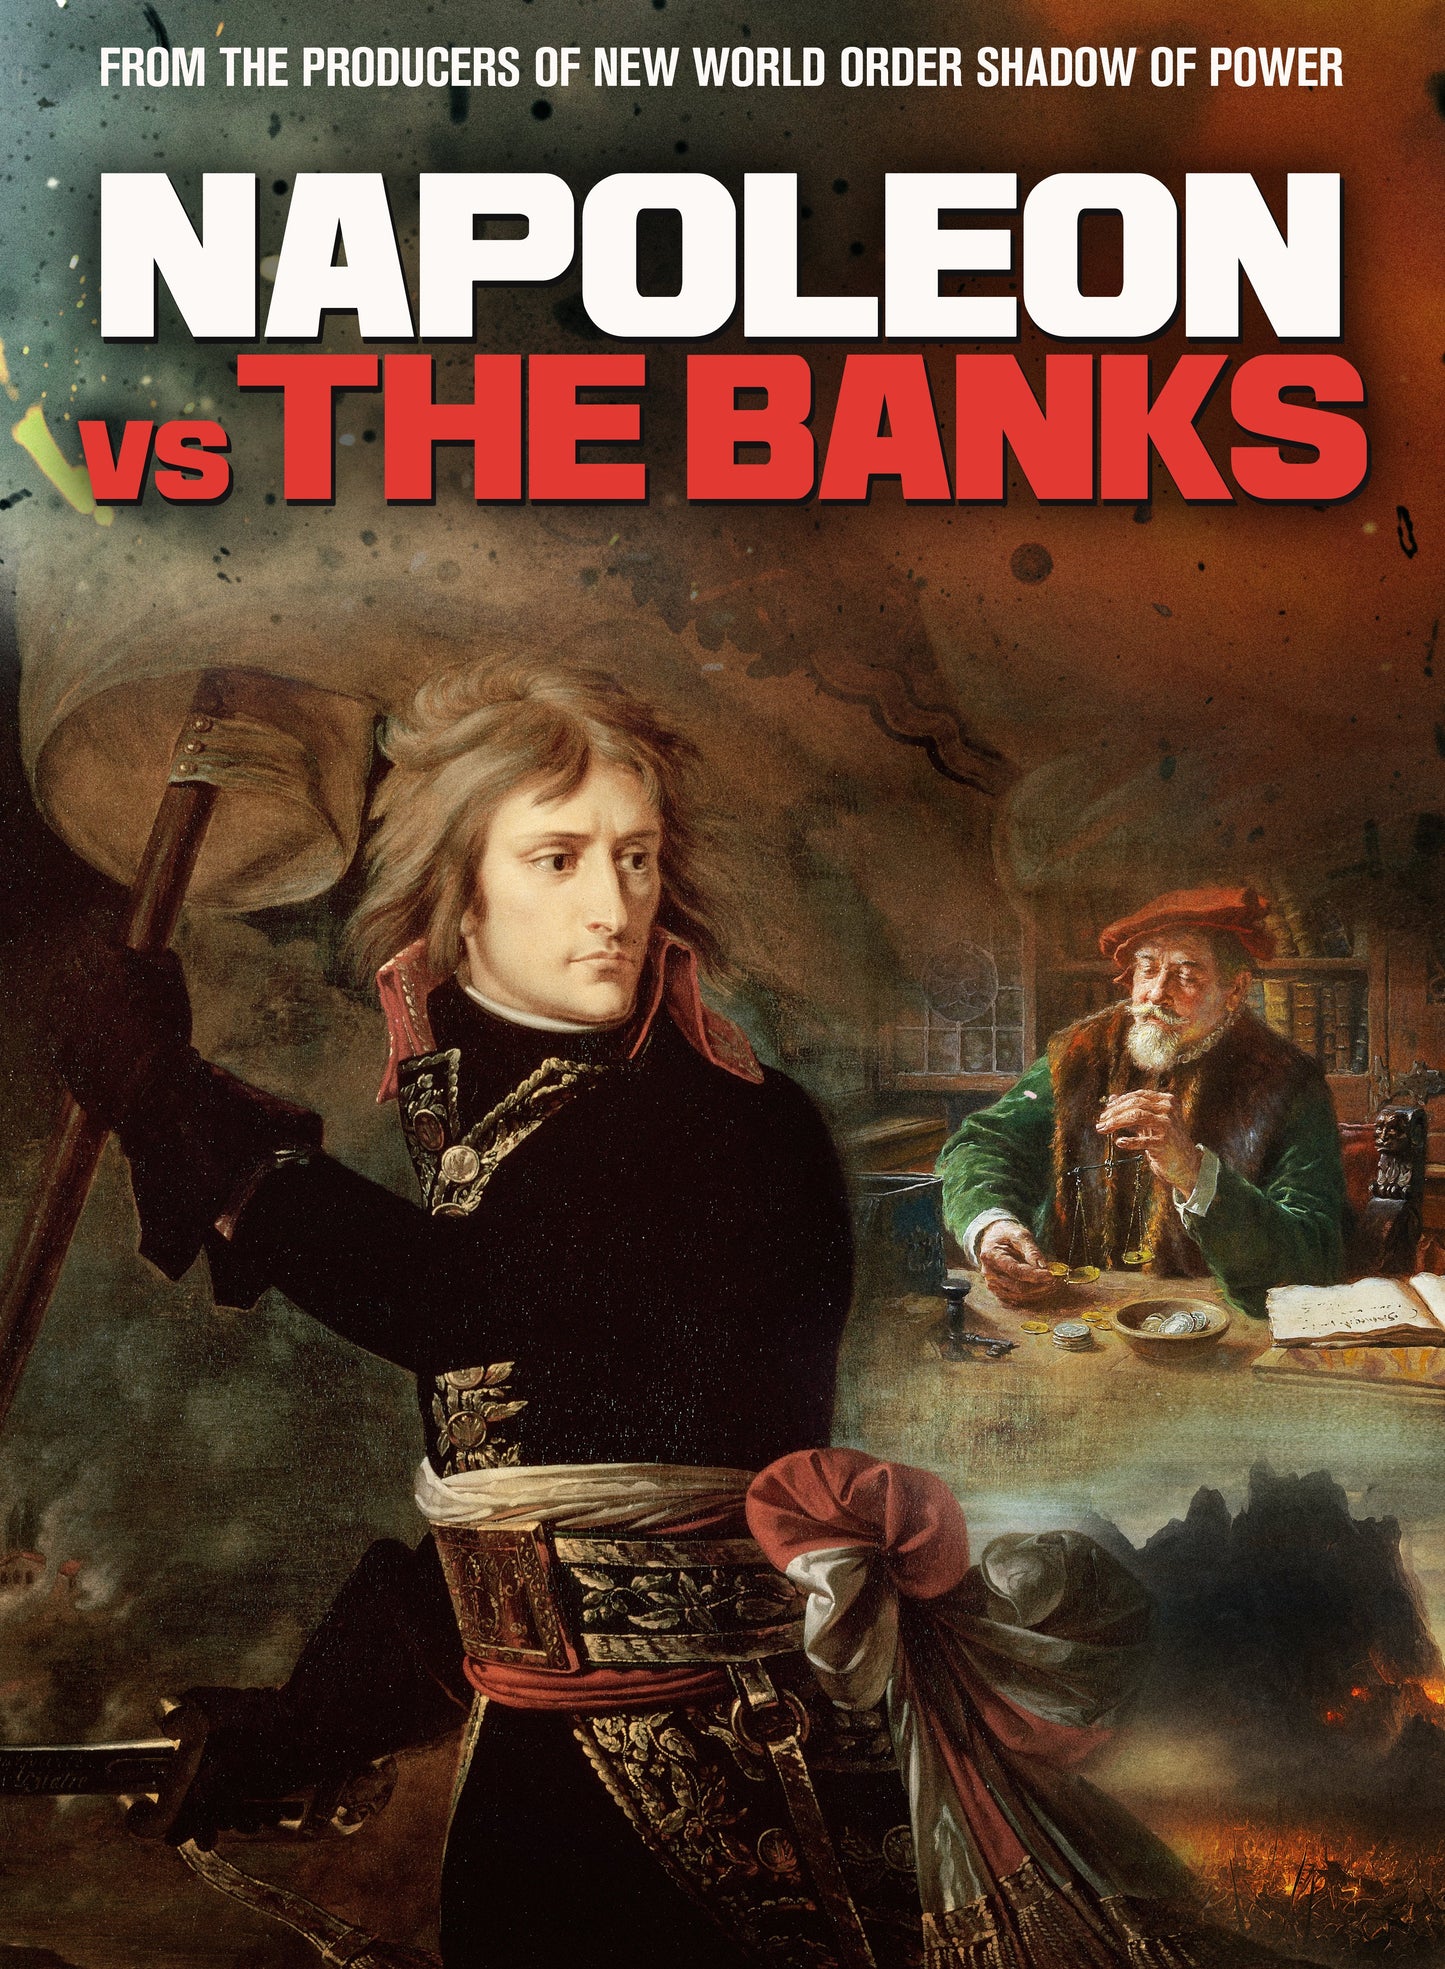 Napoleon Vs the Banks cover art